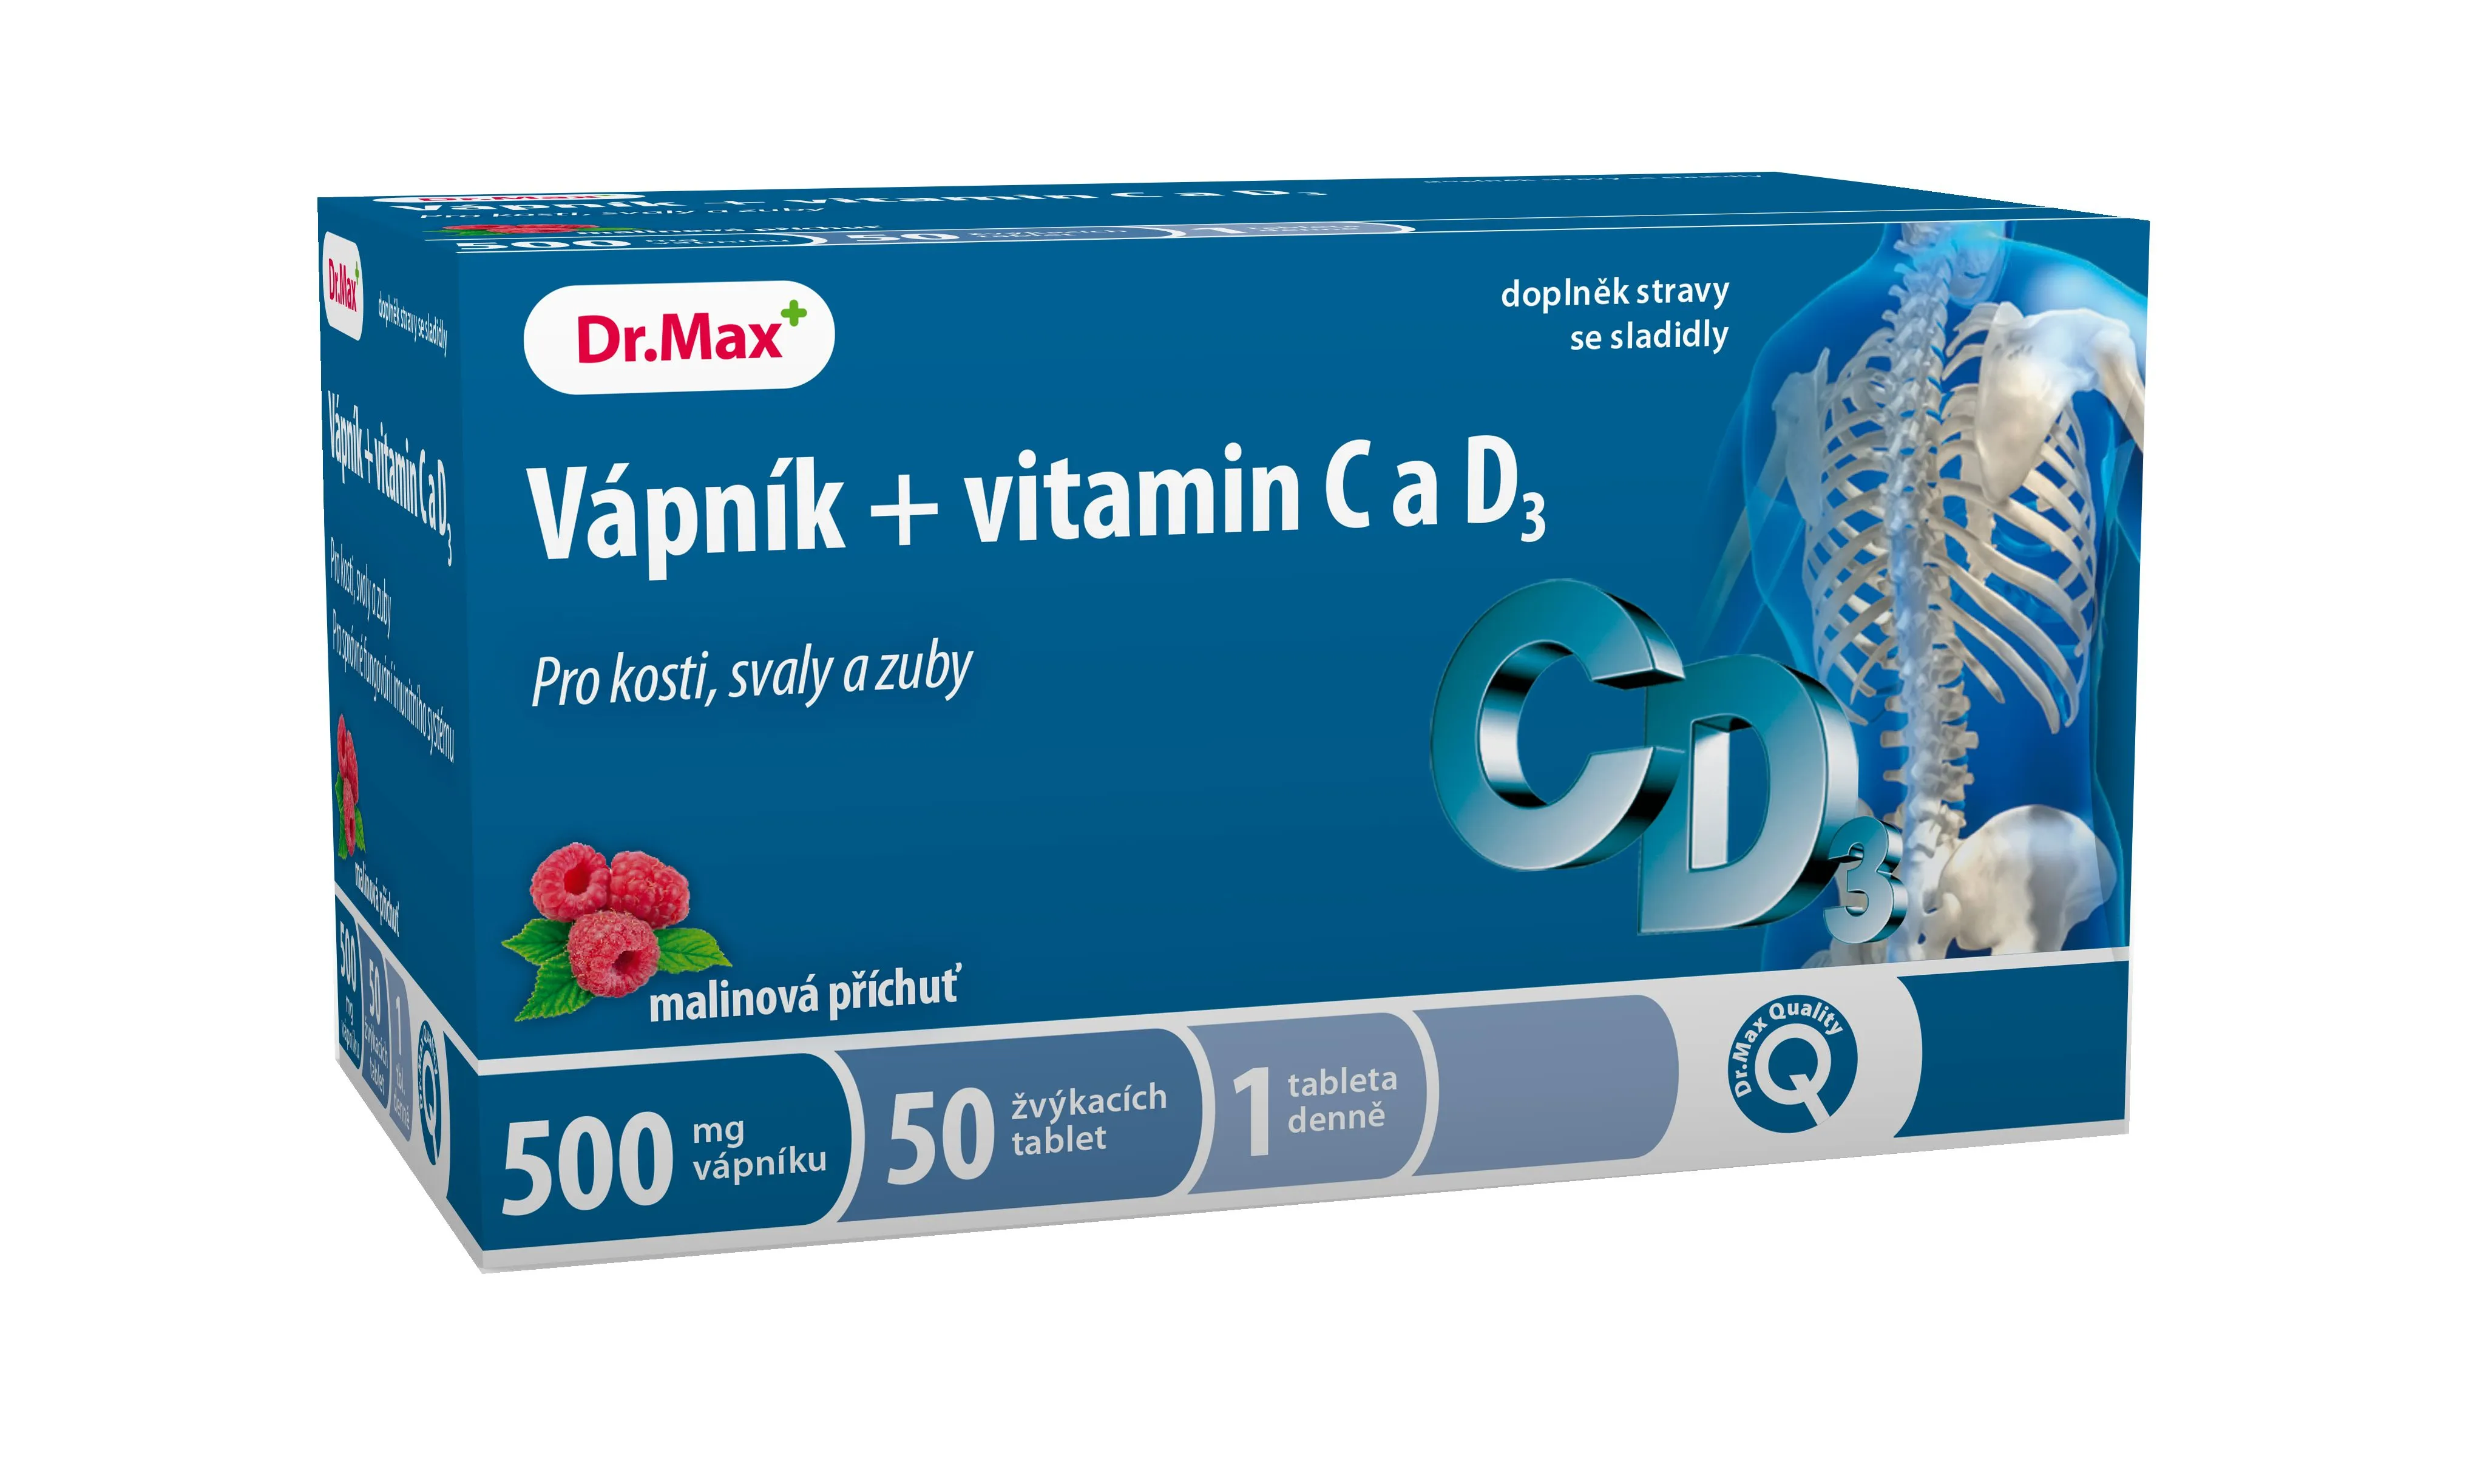 Dr.Max Vápník s vitaminy C a D